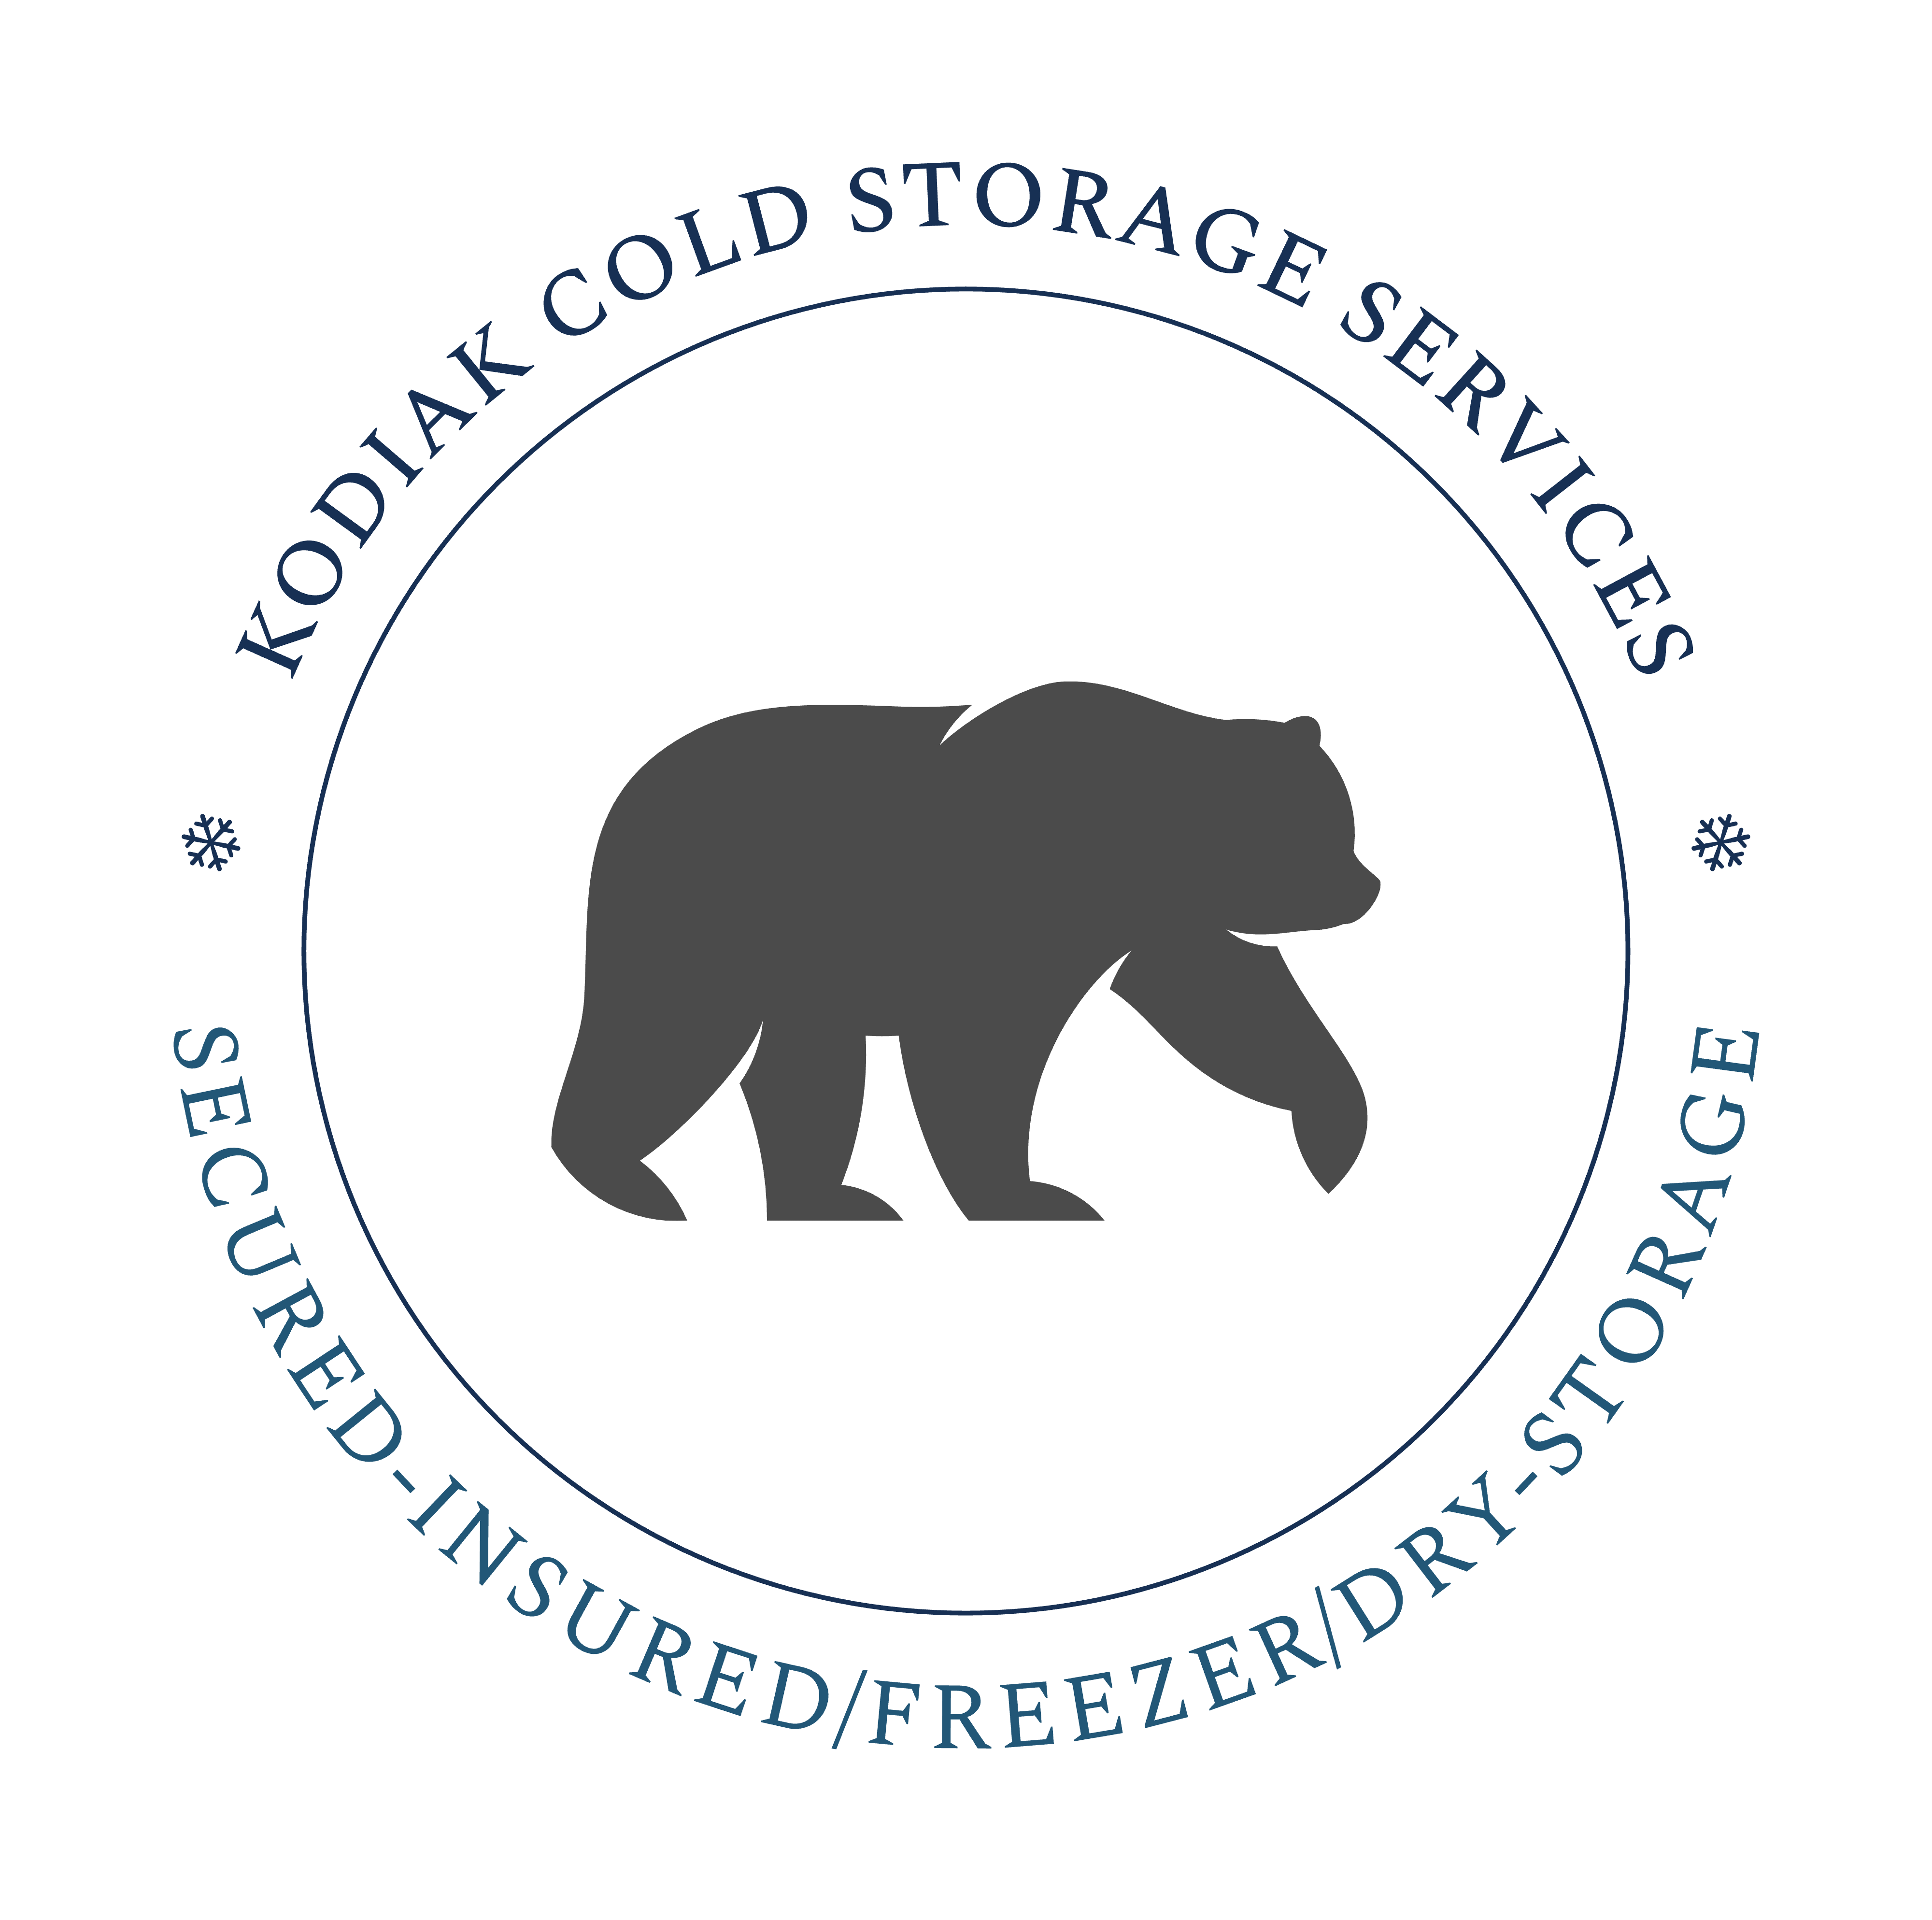 Kodiak Cold Storage Services